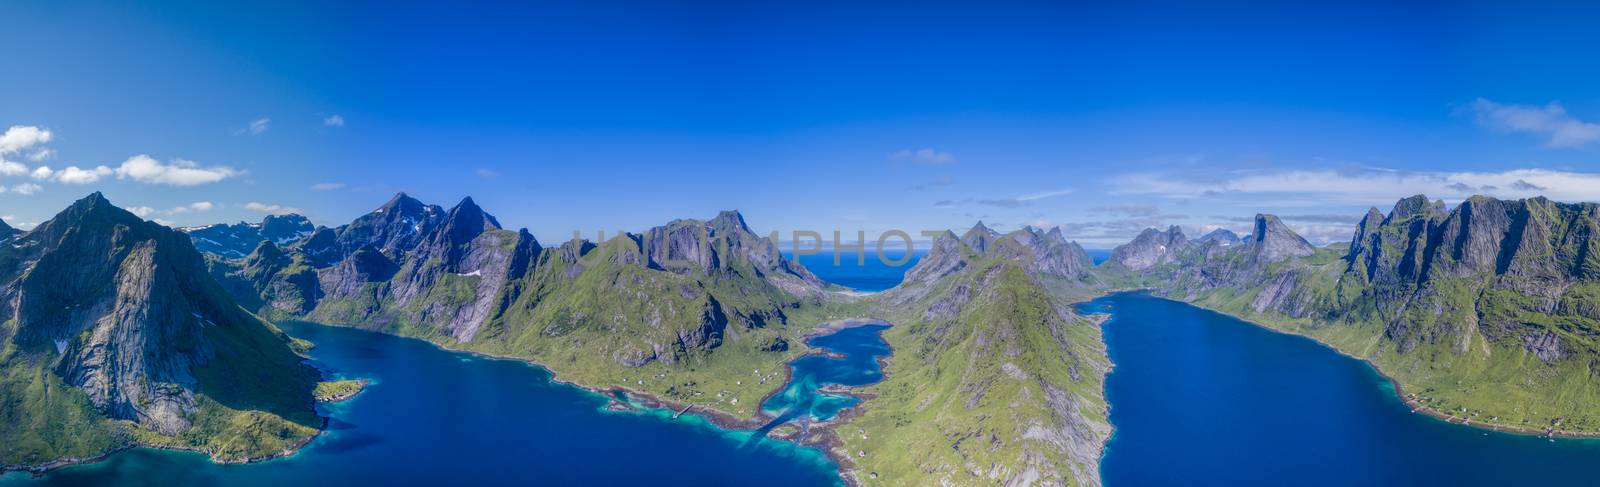 Aerial Lofoten fjord by Harvepino